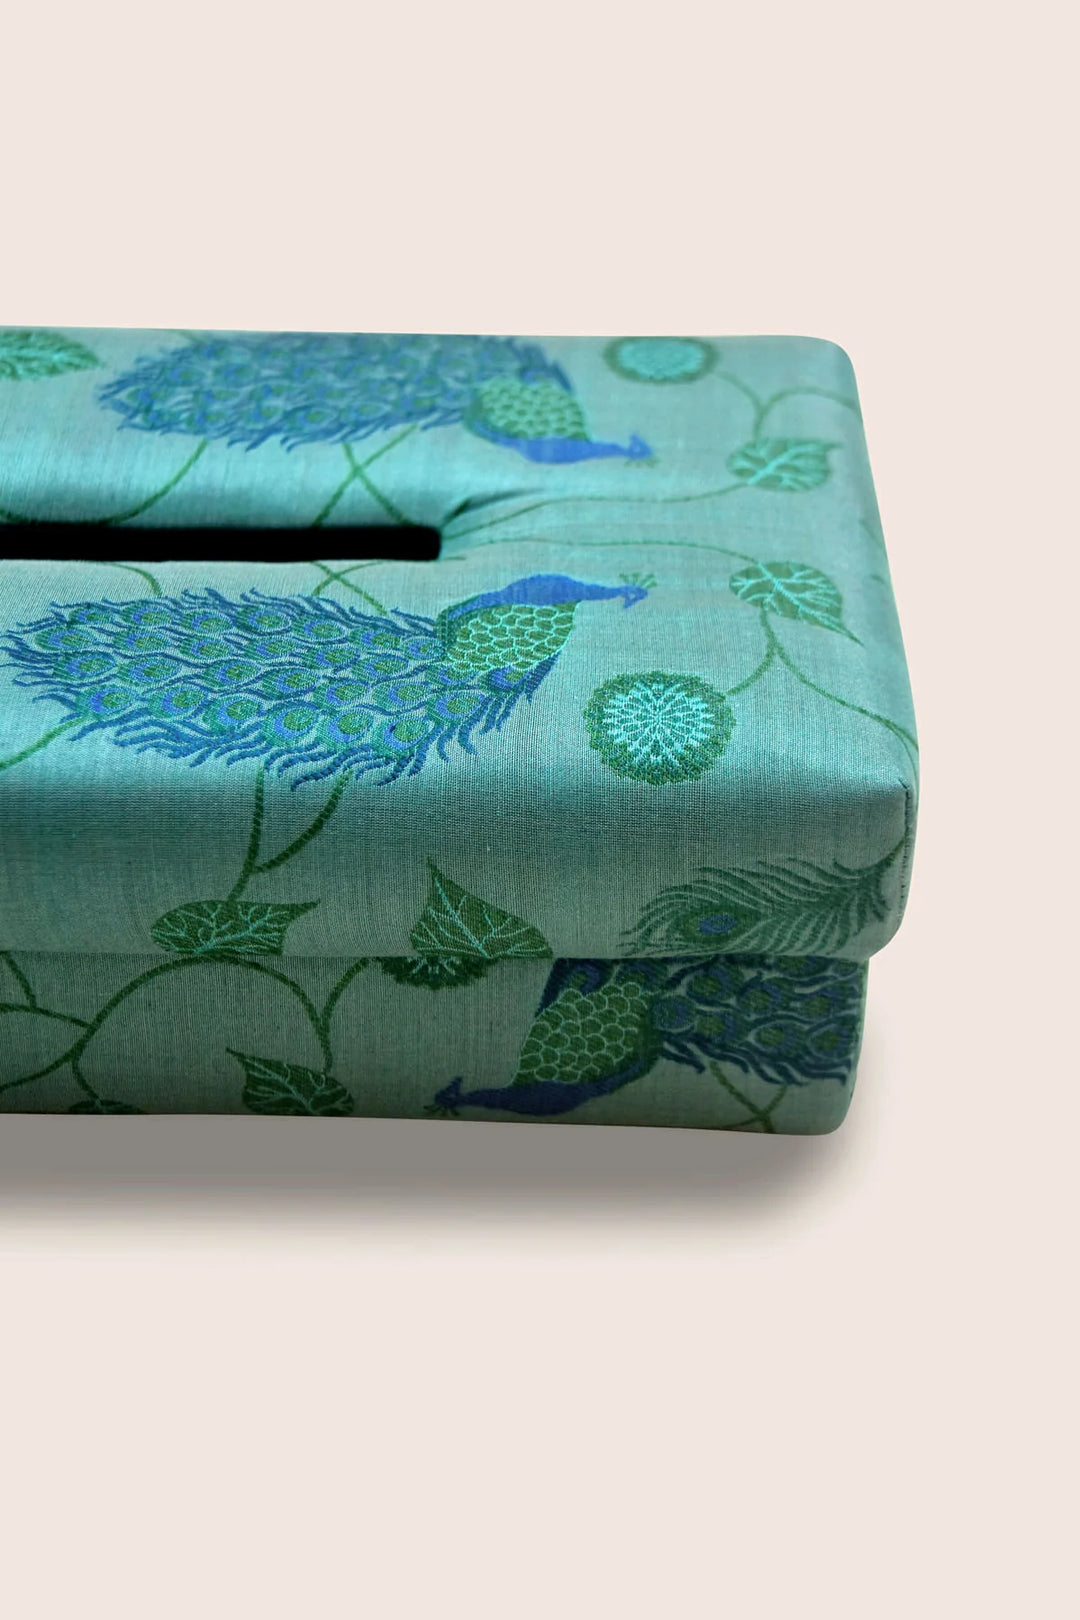 Peacock Illustration Silk Tissue Box | Imber Handmade Tissue Box - Blue